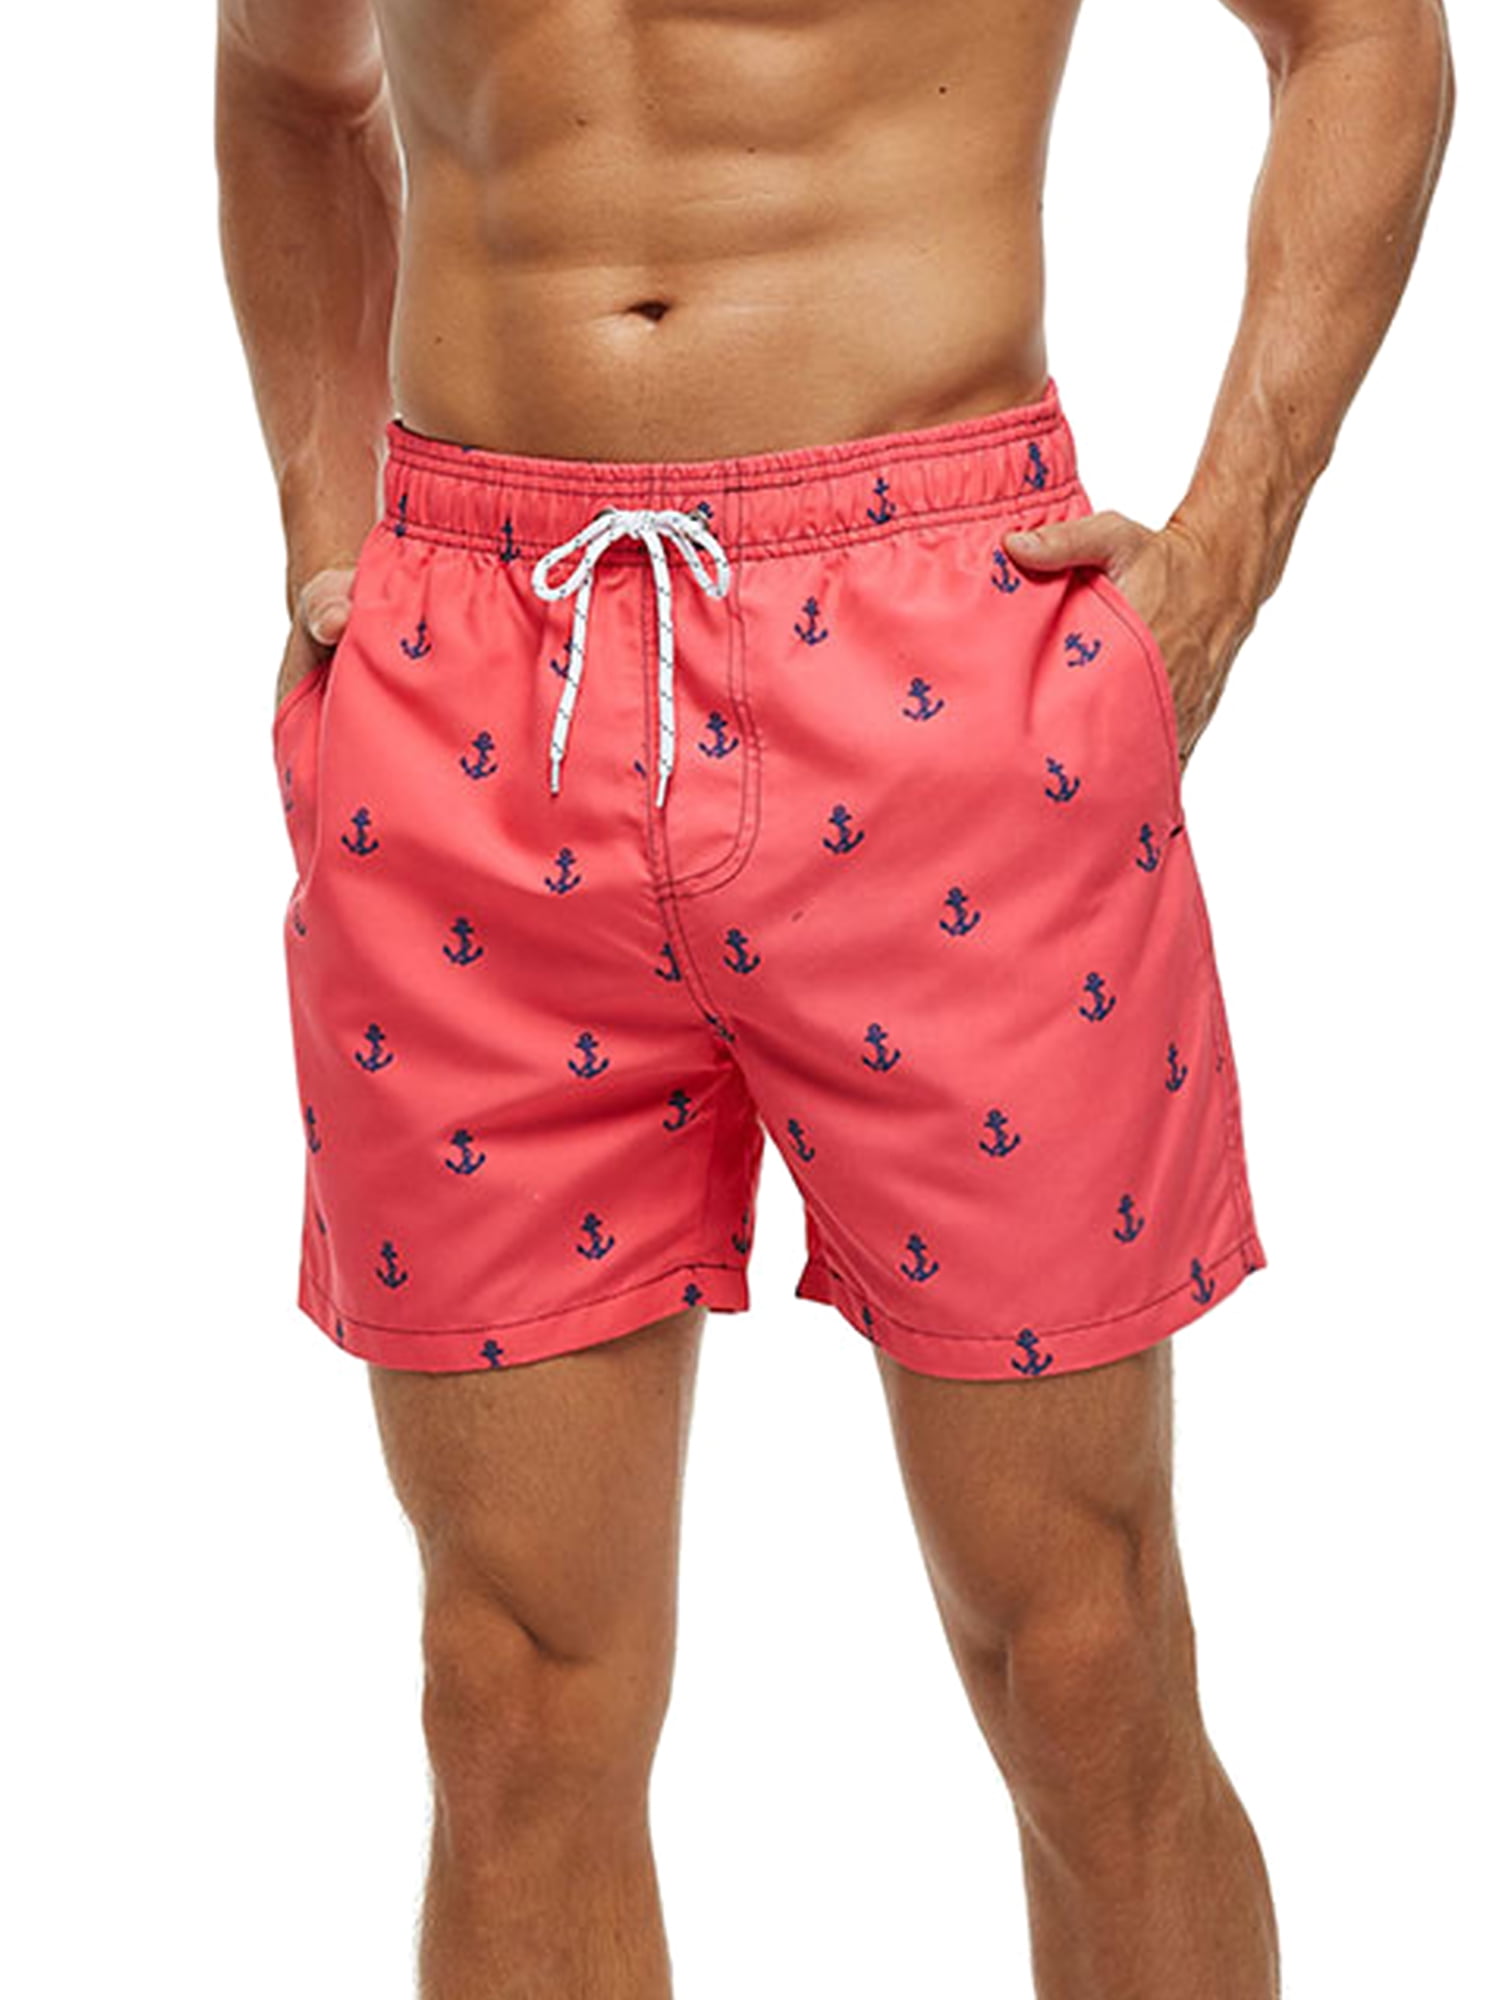 NiYoung Mens Fashion Swim Trunk Shorts Quick Dry Beach Swimwear with Pockets